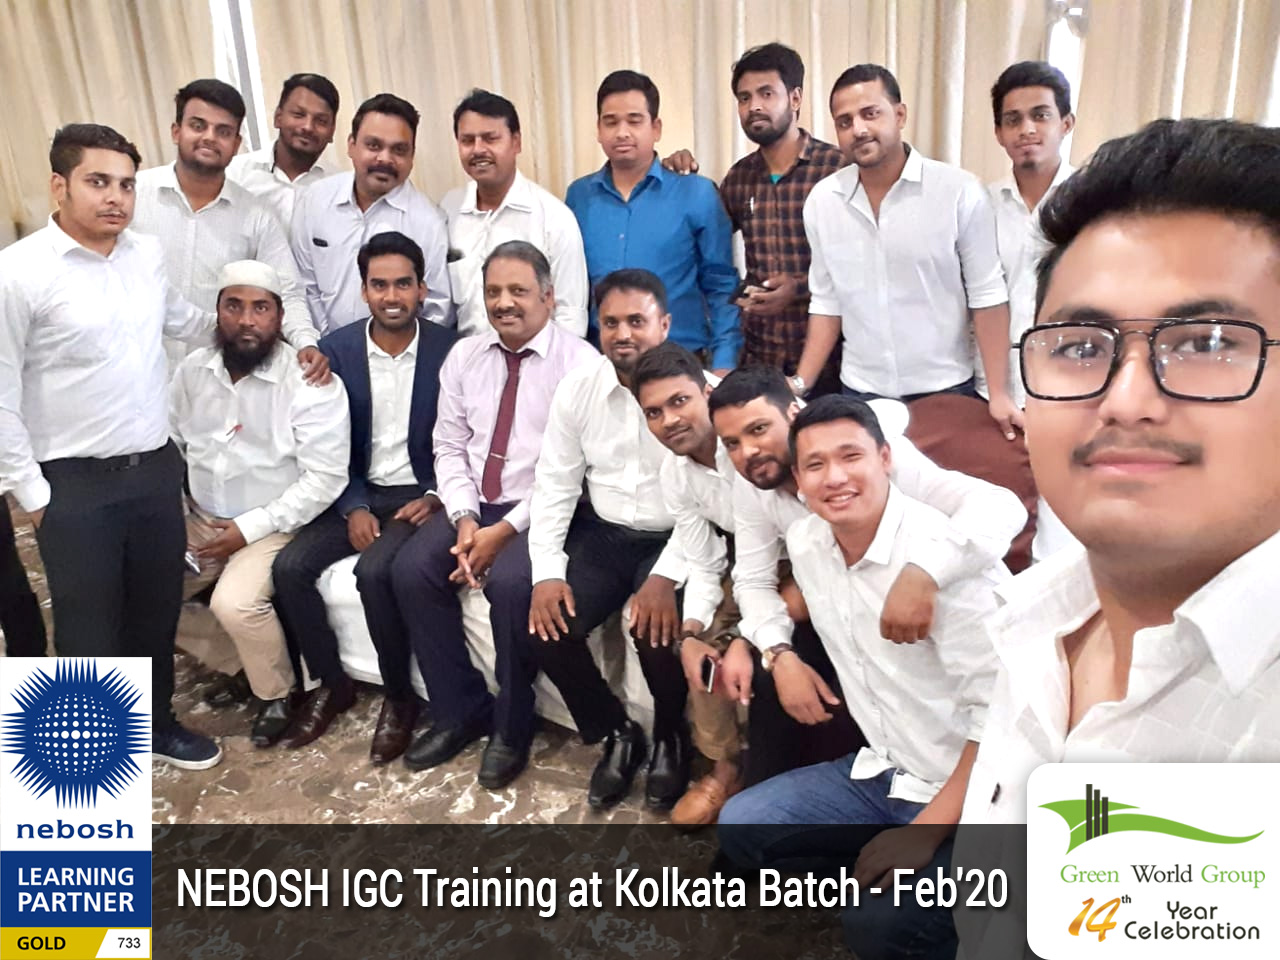 Nebosh IGC Training at Kolkata Batch - Feb'20